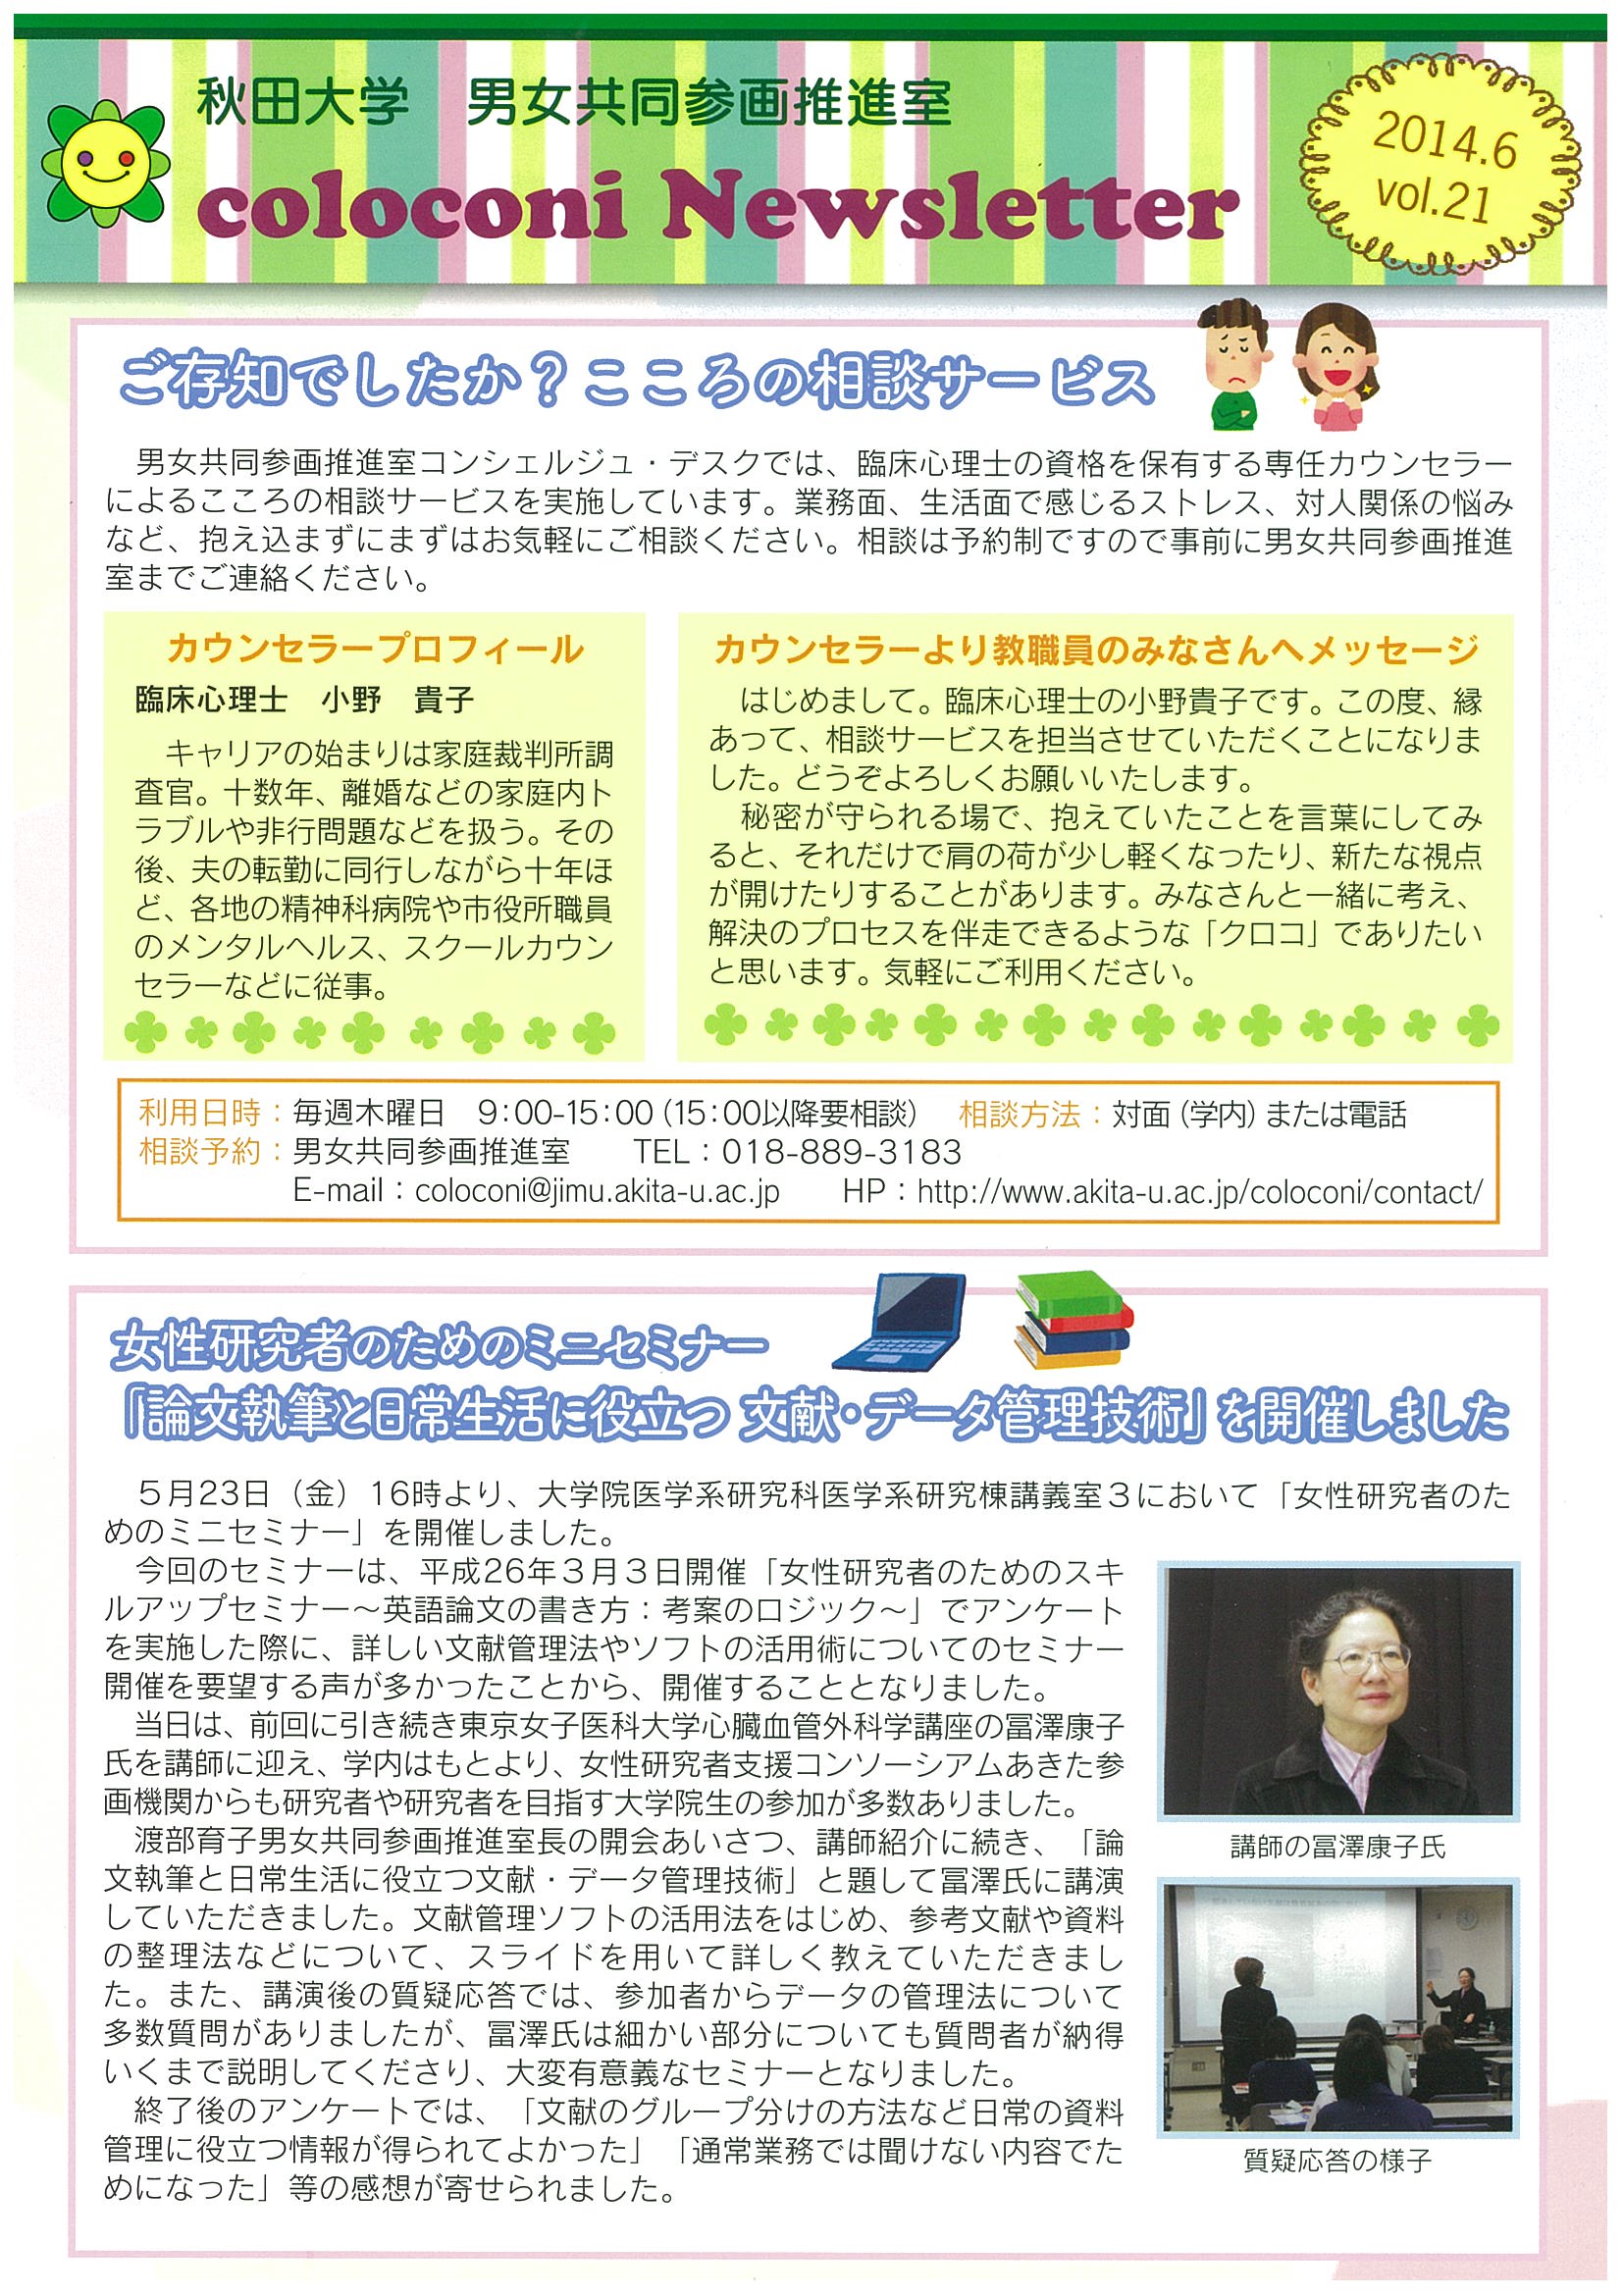 Newsletter　【vol.21 (2014.6)】 